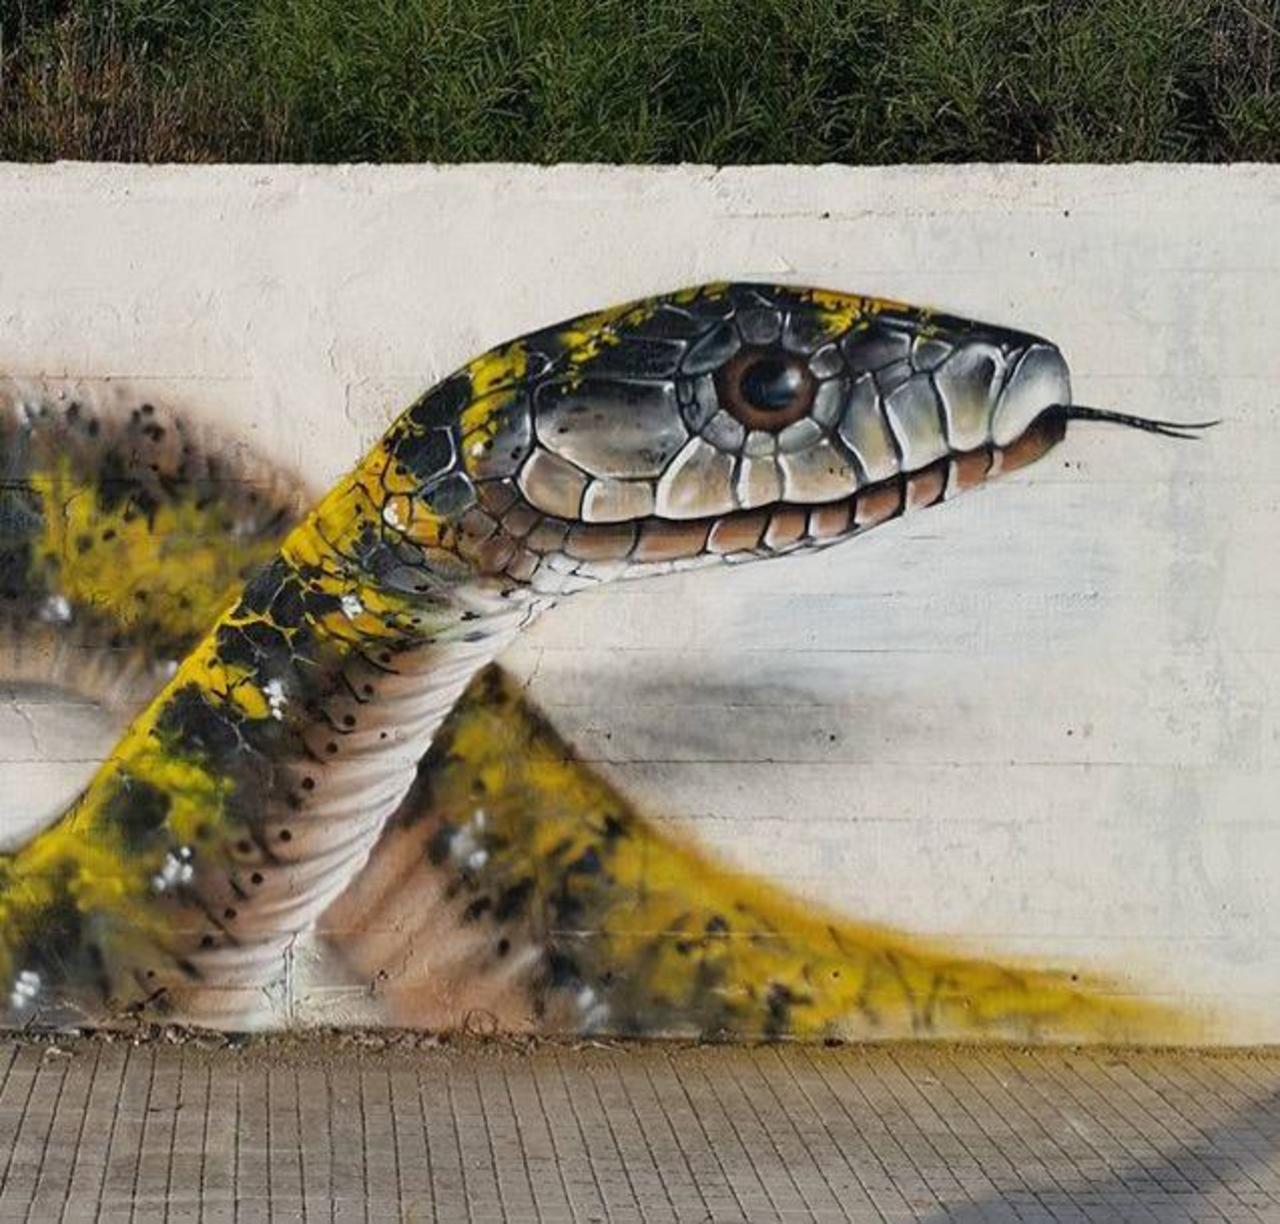 Street Art by Cosimocheone 

#art #graffiti #mural #streetart http://t.co/2xpEKo41KN